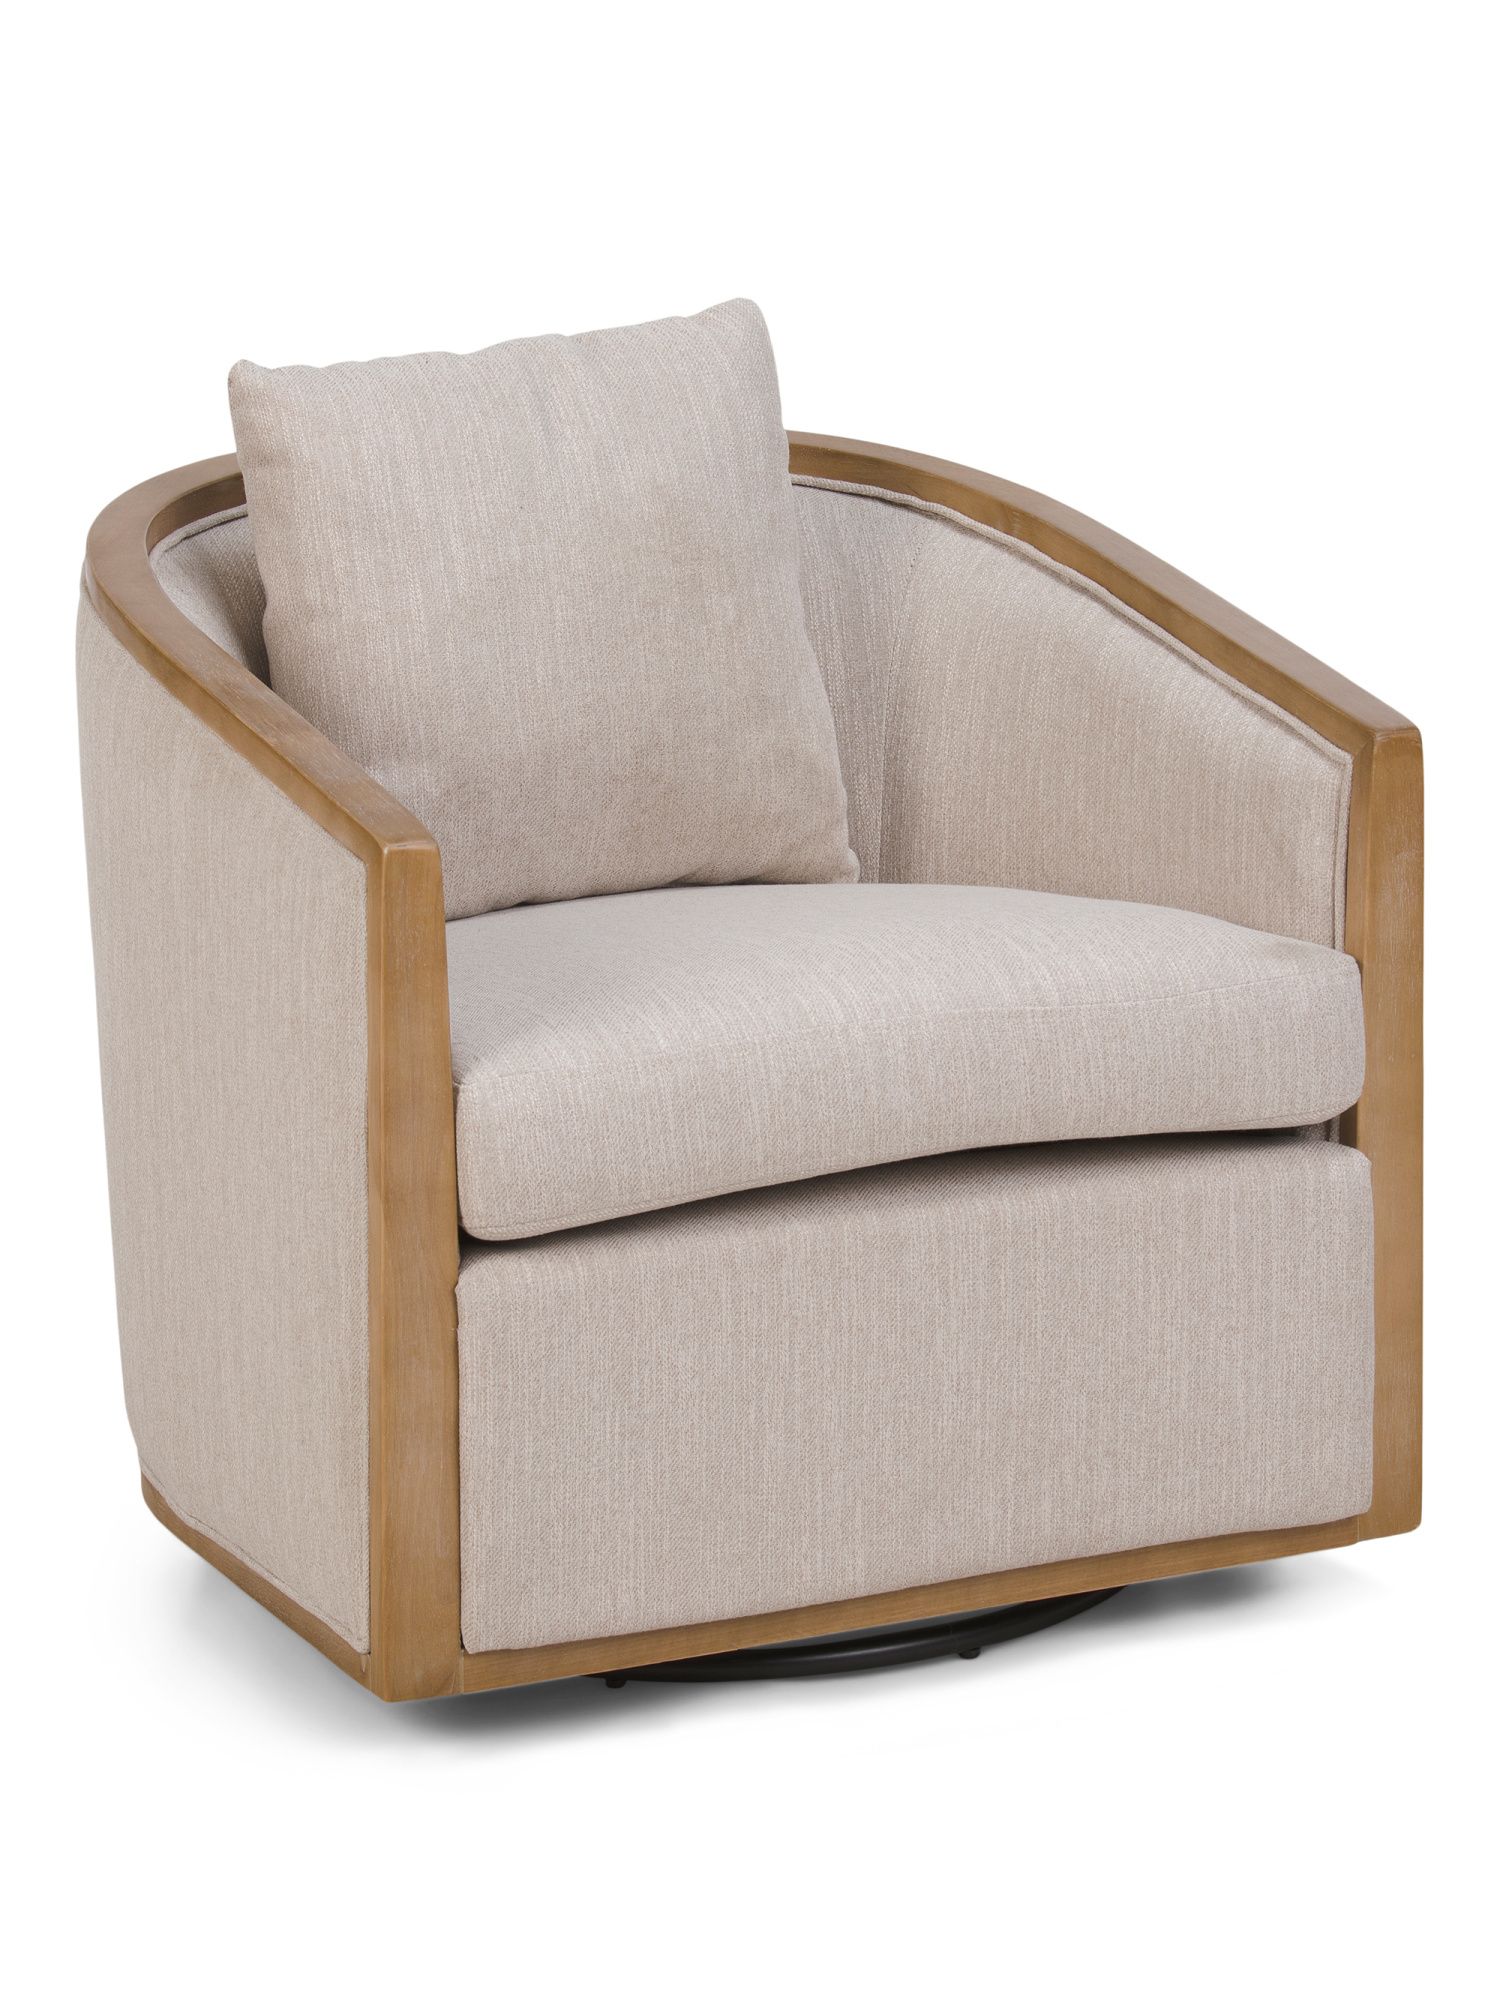 Eleanor Swivel Accent Chair | TJ Maxx